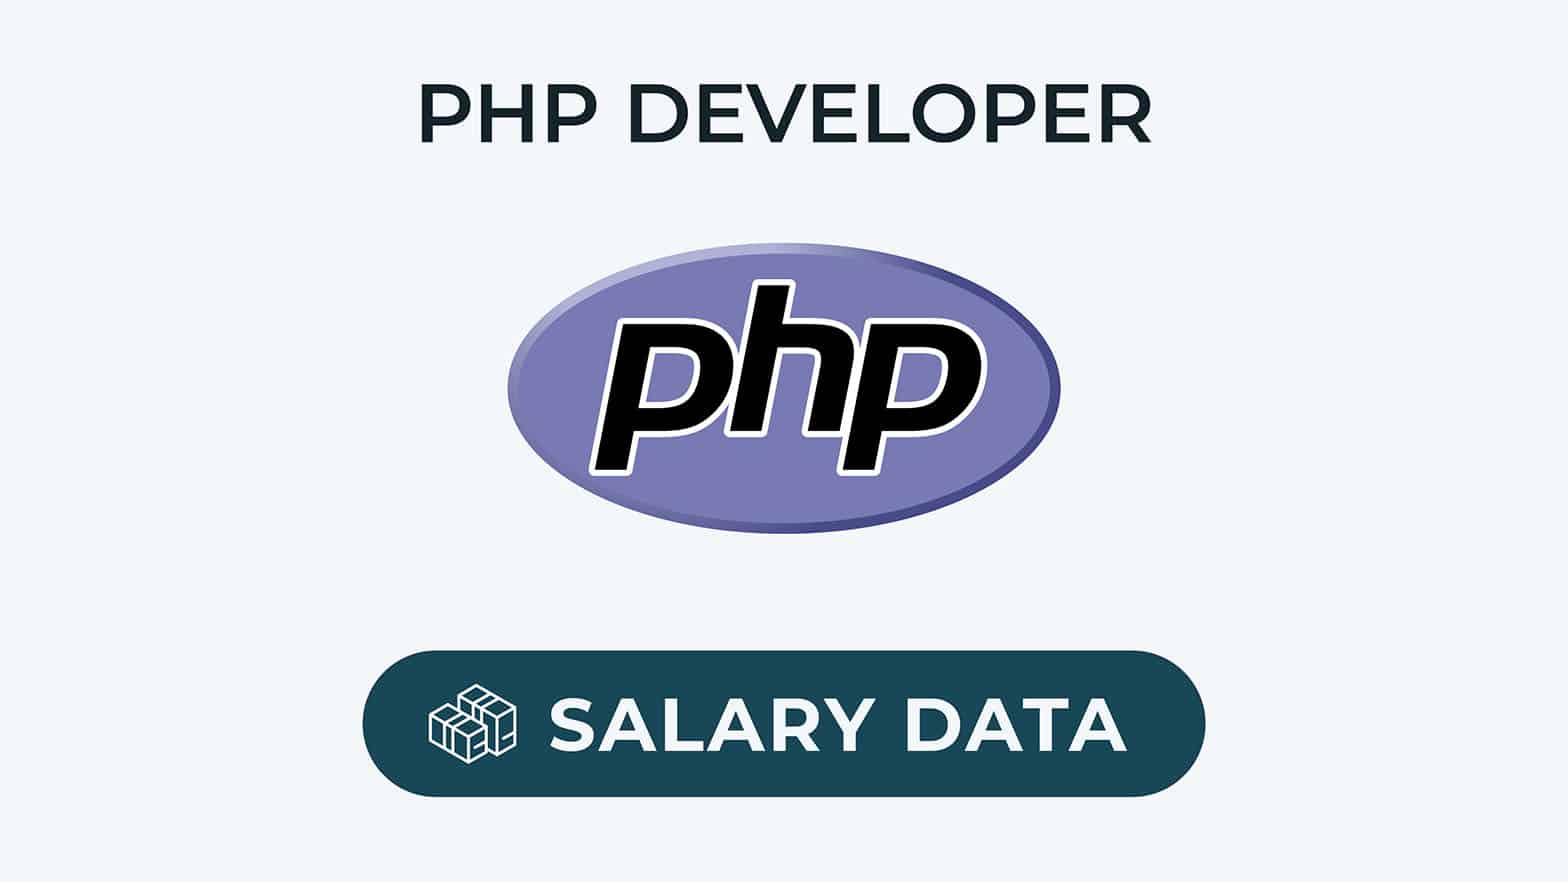 PHP Developer salary